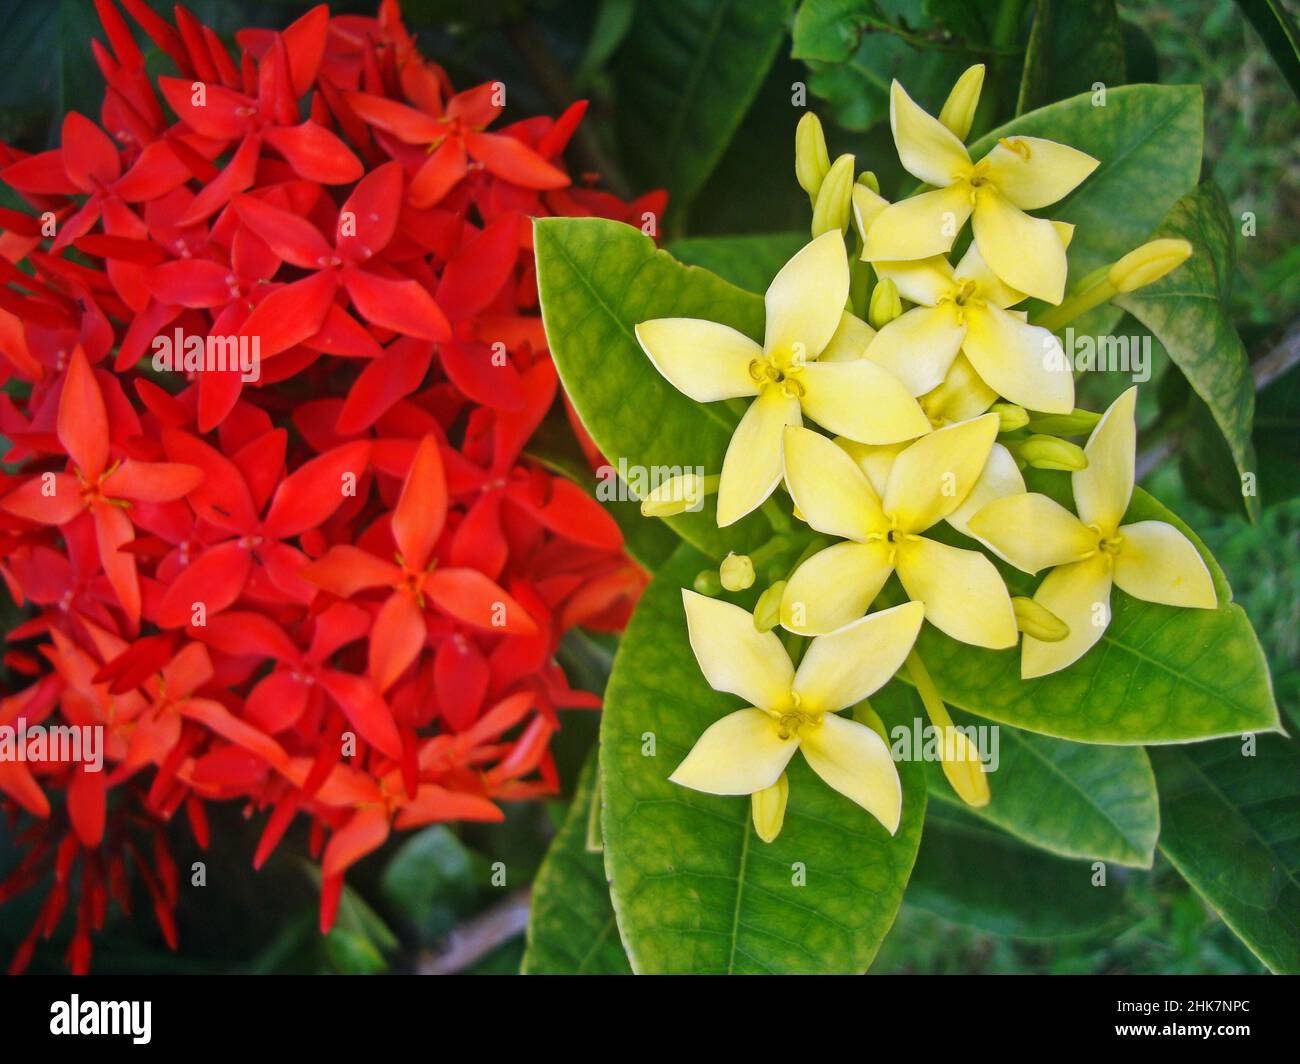 Red and yellow ixora flowers (Ixora coccinea) Stock Photo